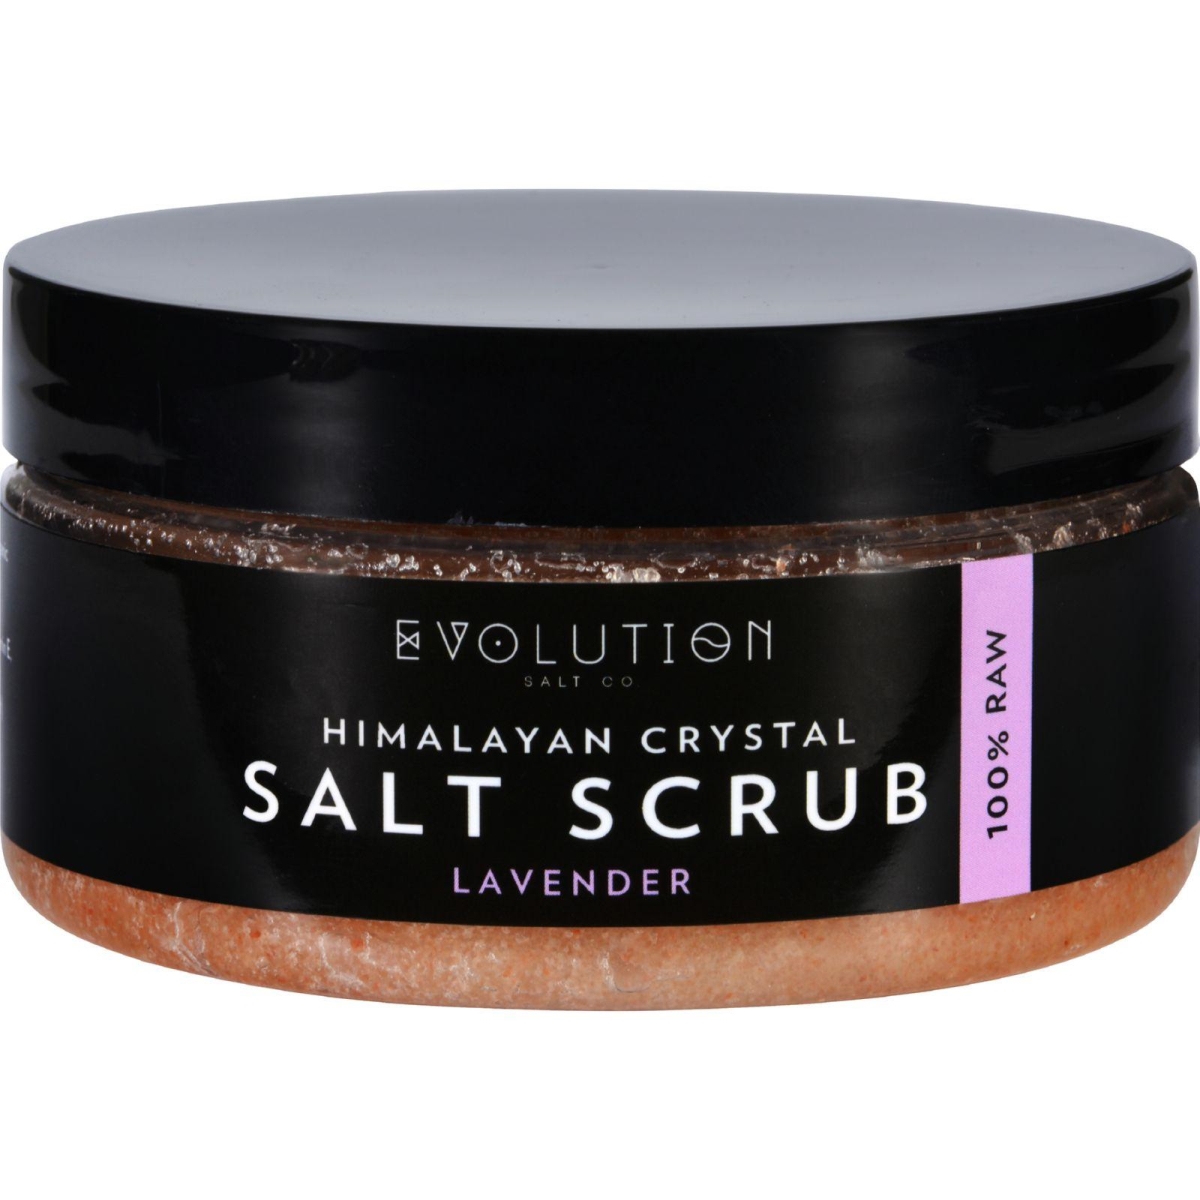 Hg1702331 12 Oz Himalayan Salt Scrub, Lavender